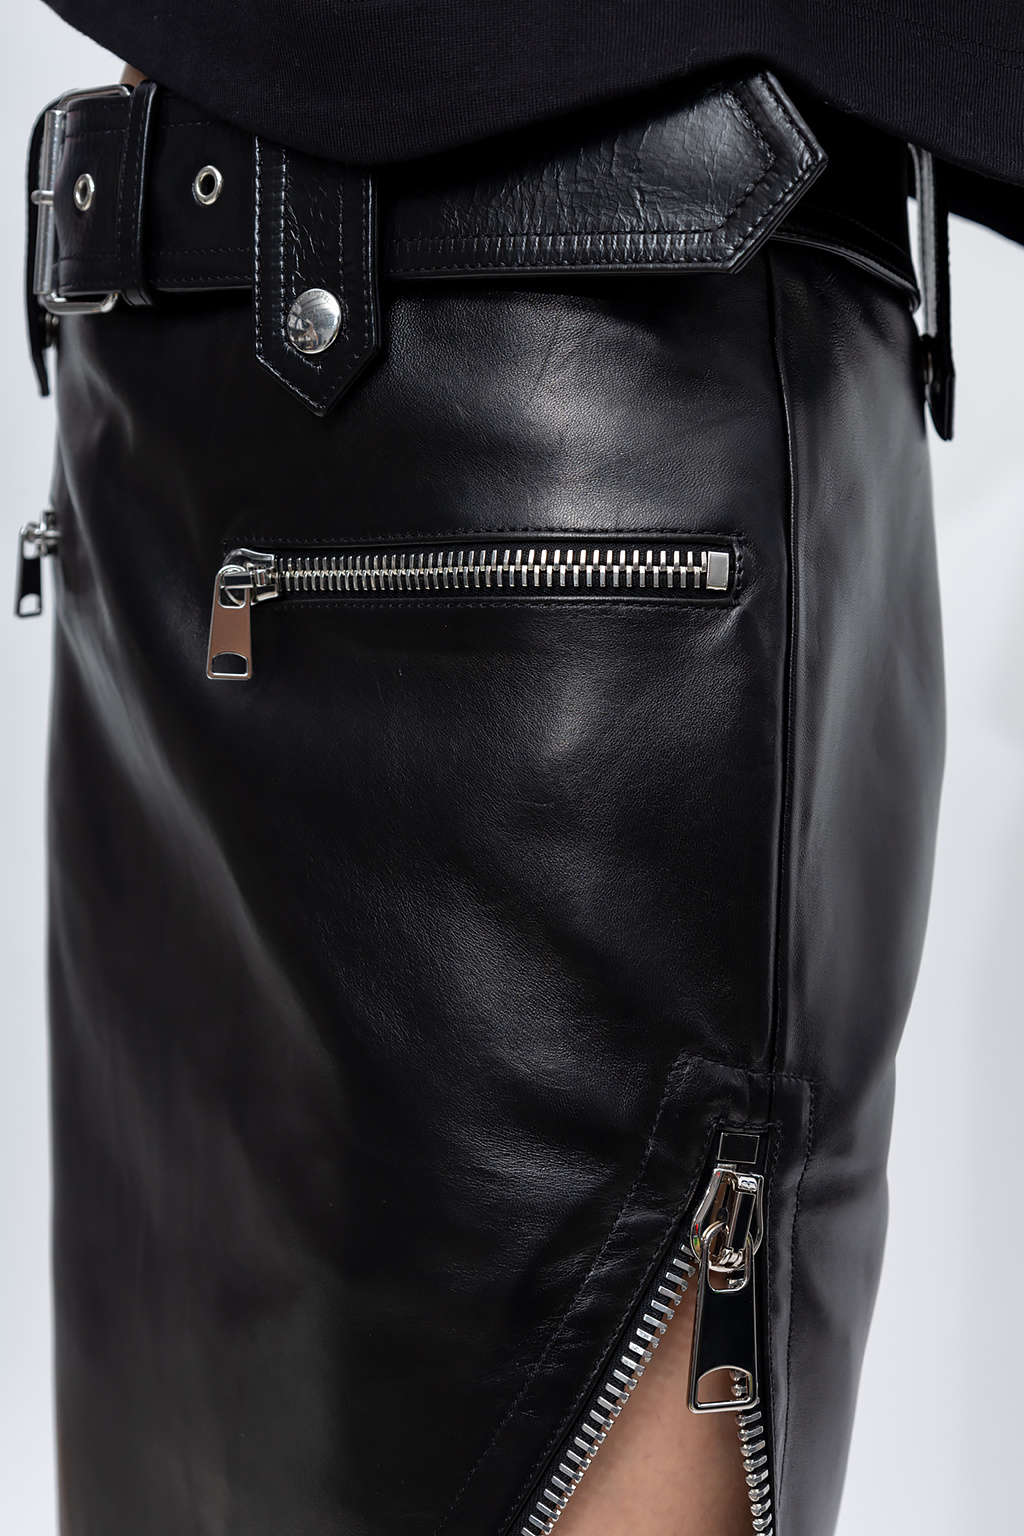 Alexander McQueen Leather skirt